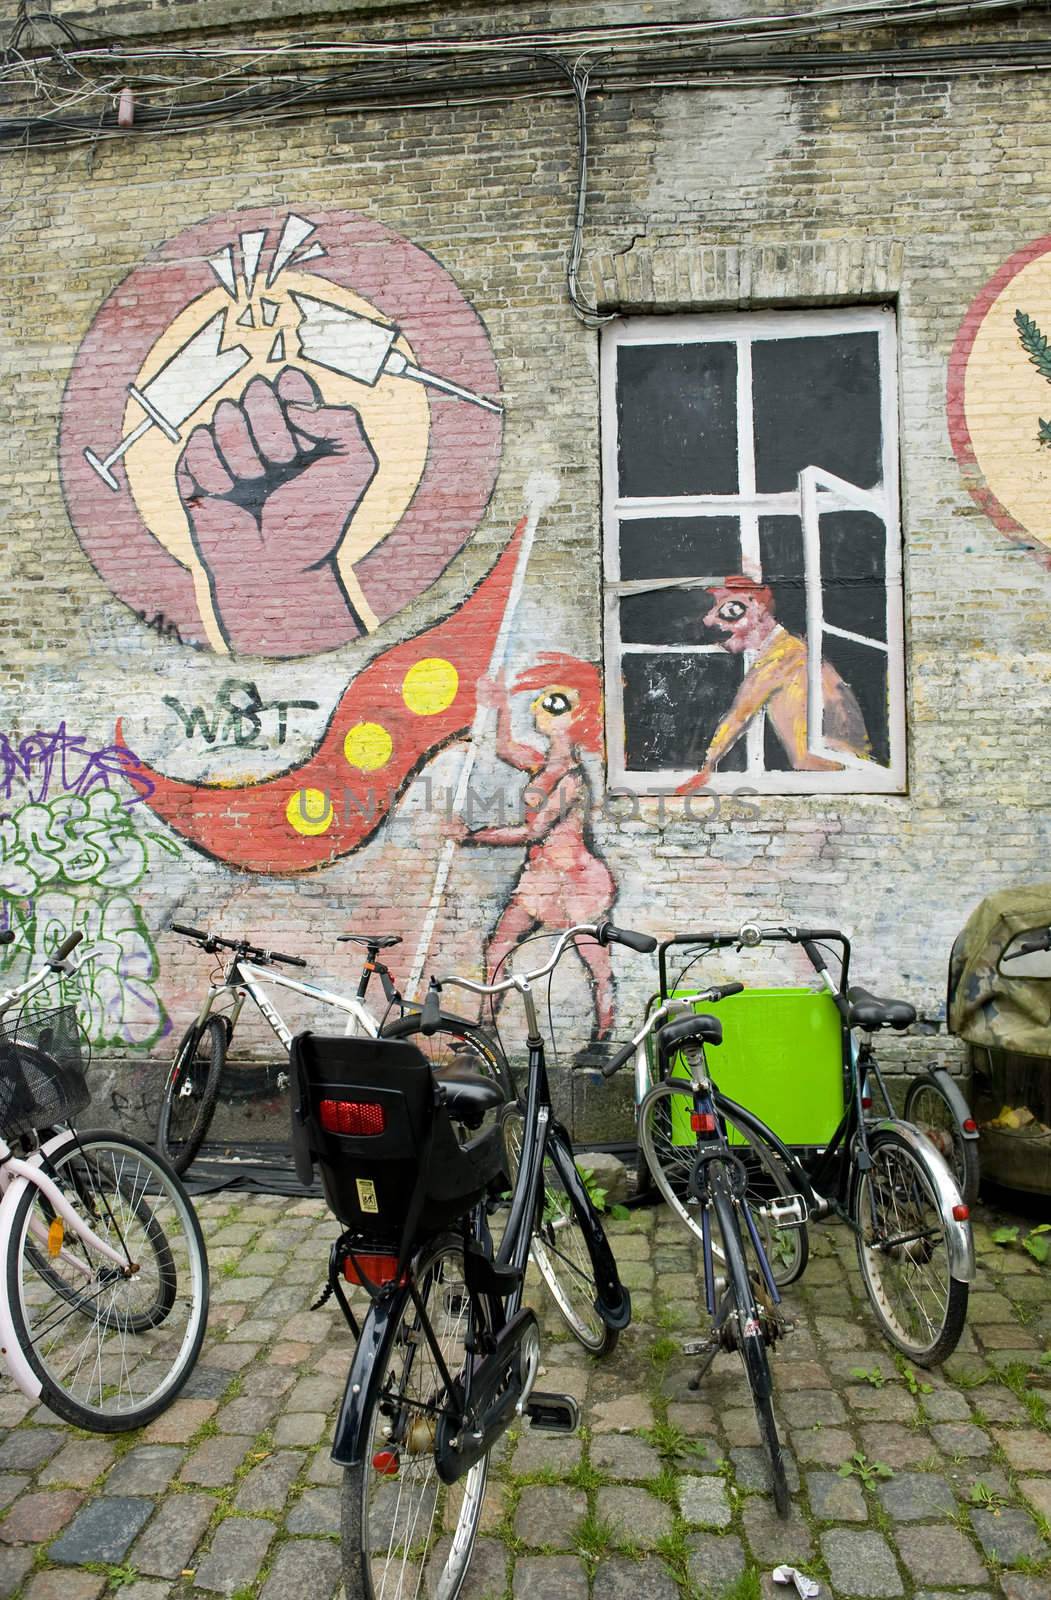 Graffiti of Christiania by Alenmax